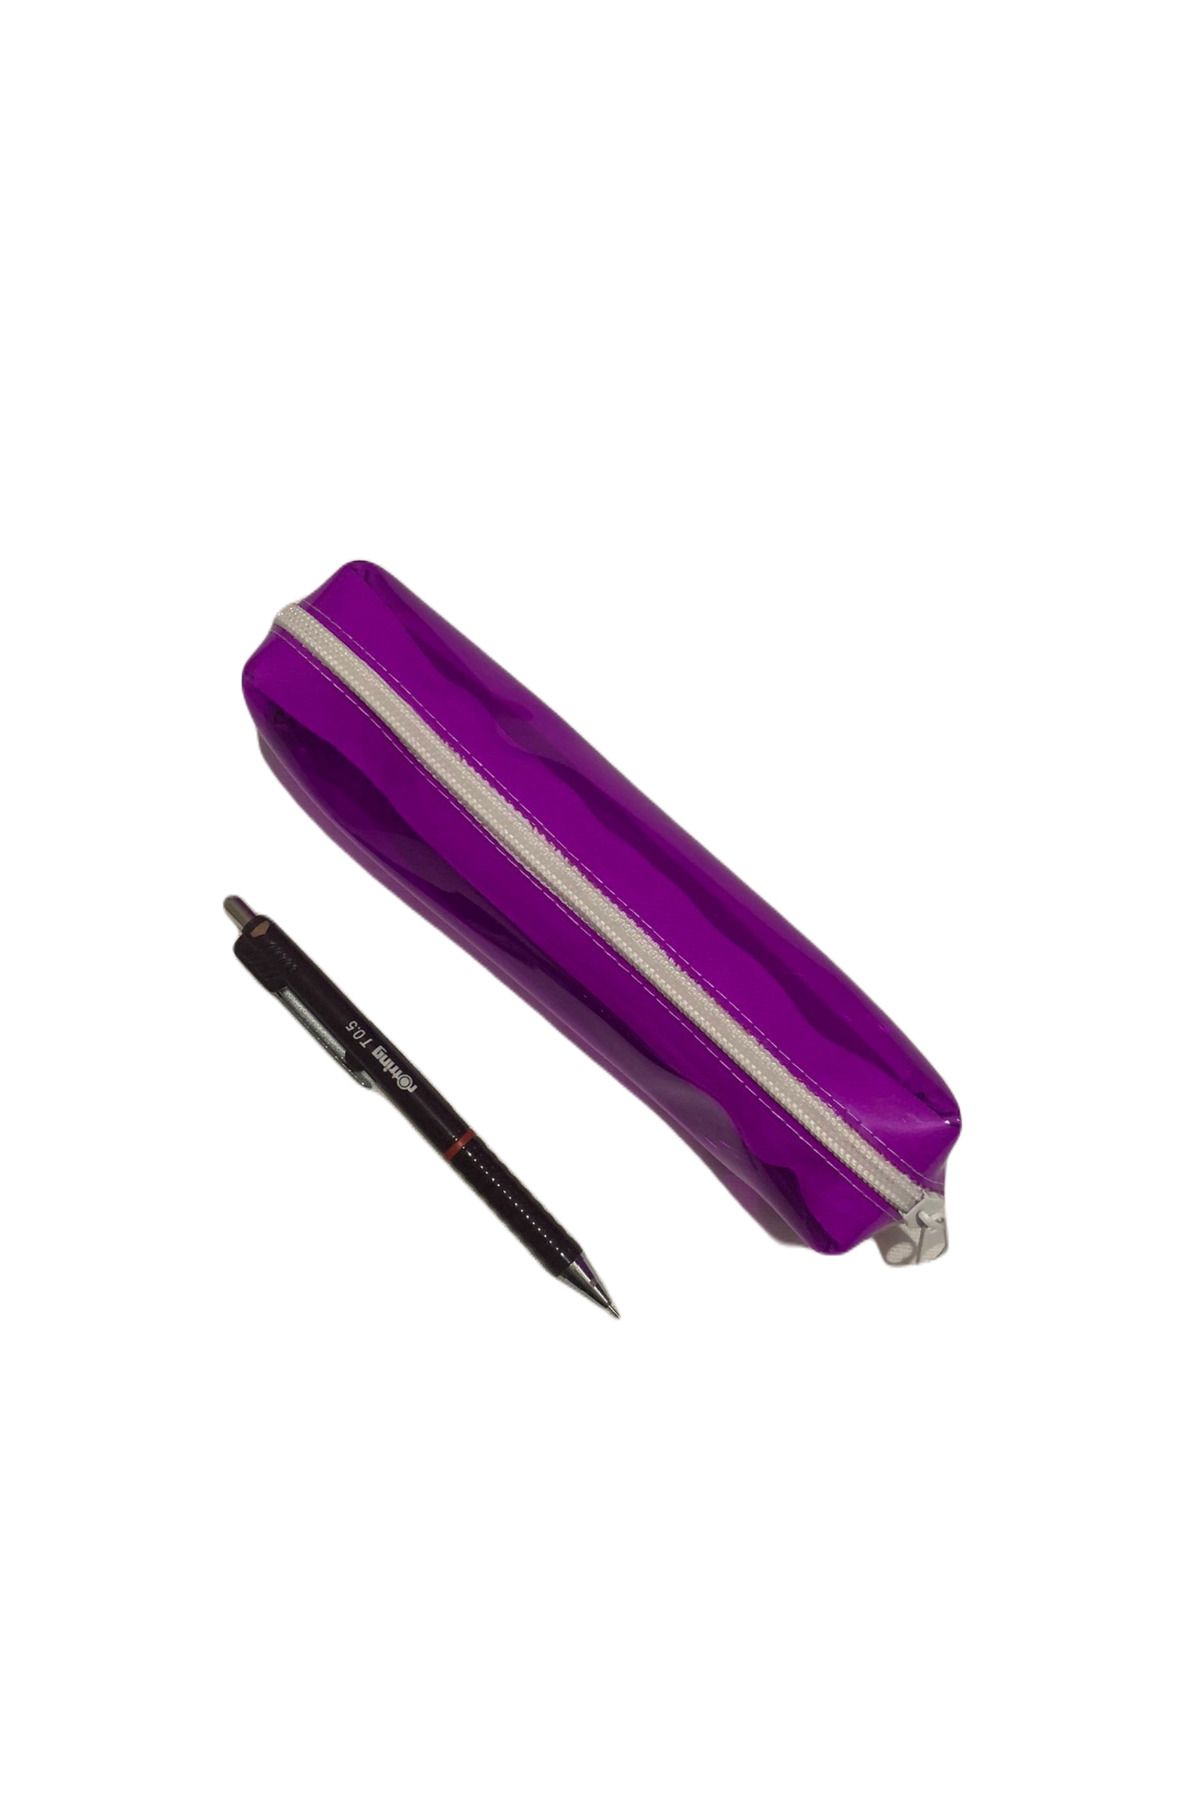 Rotring ROTRİNG Tikky Klasik Uçlu Kalem 0.5mm + Şeffaf Kalemlik